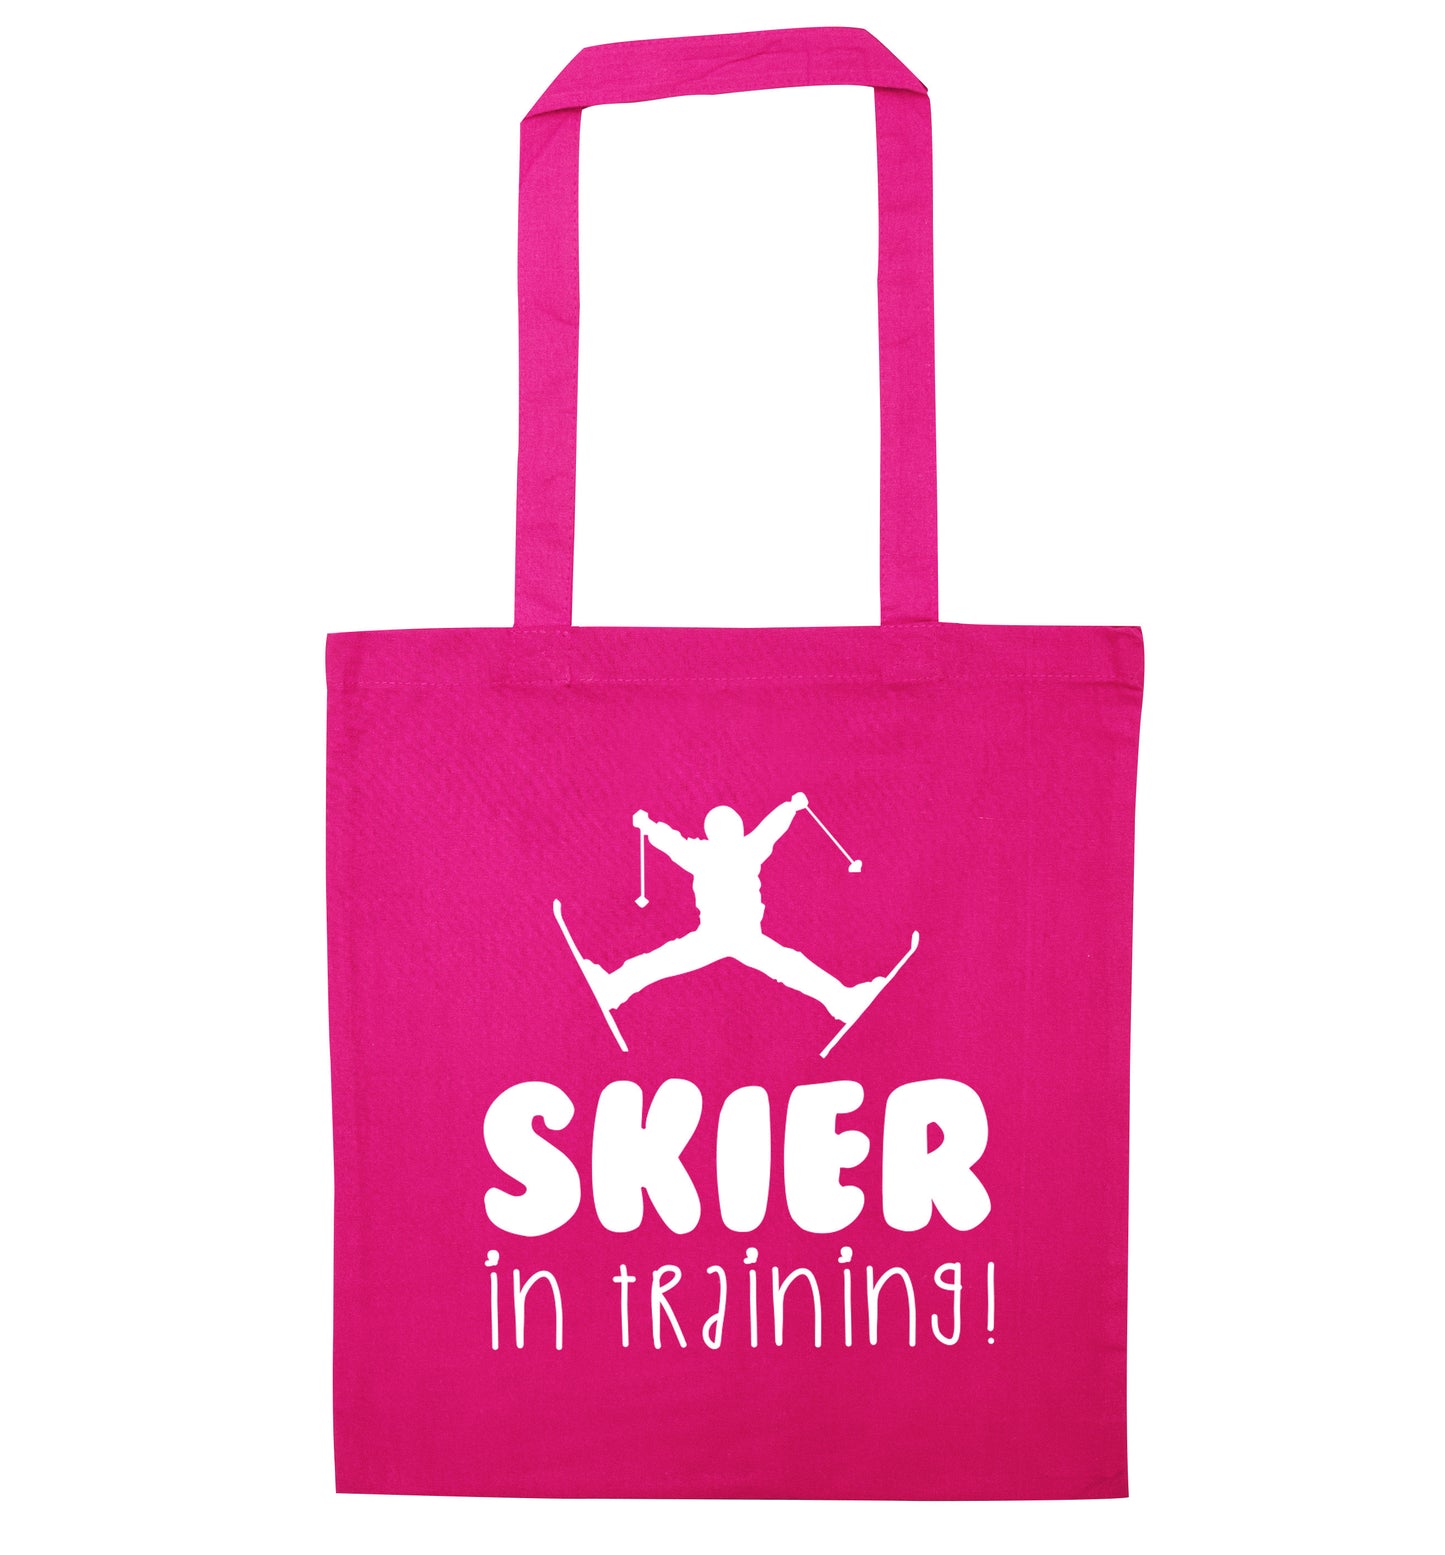 Skier in training pink tote bag